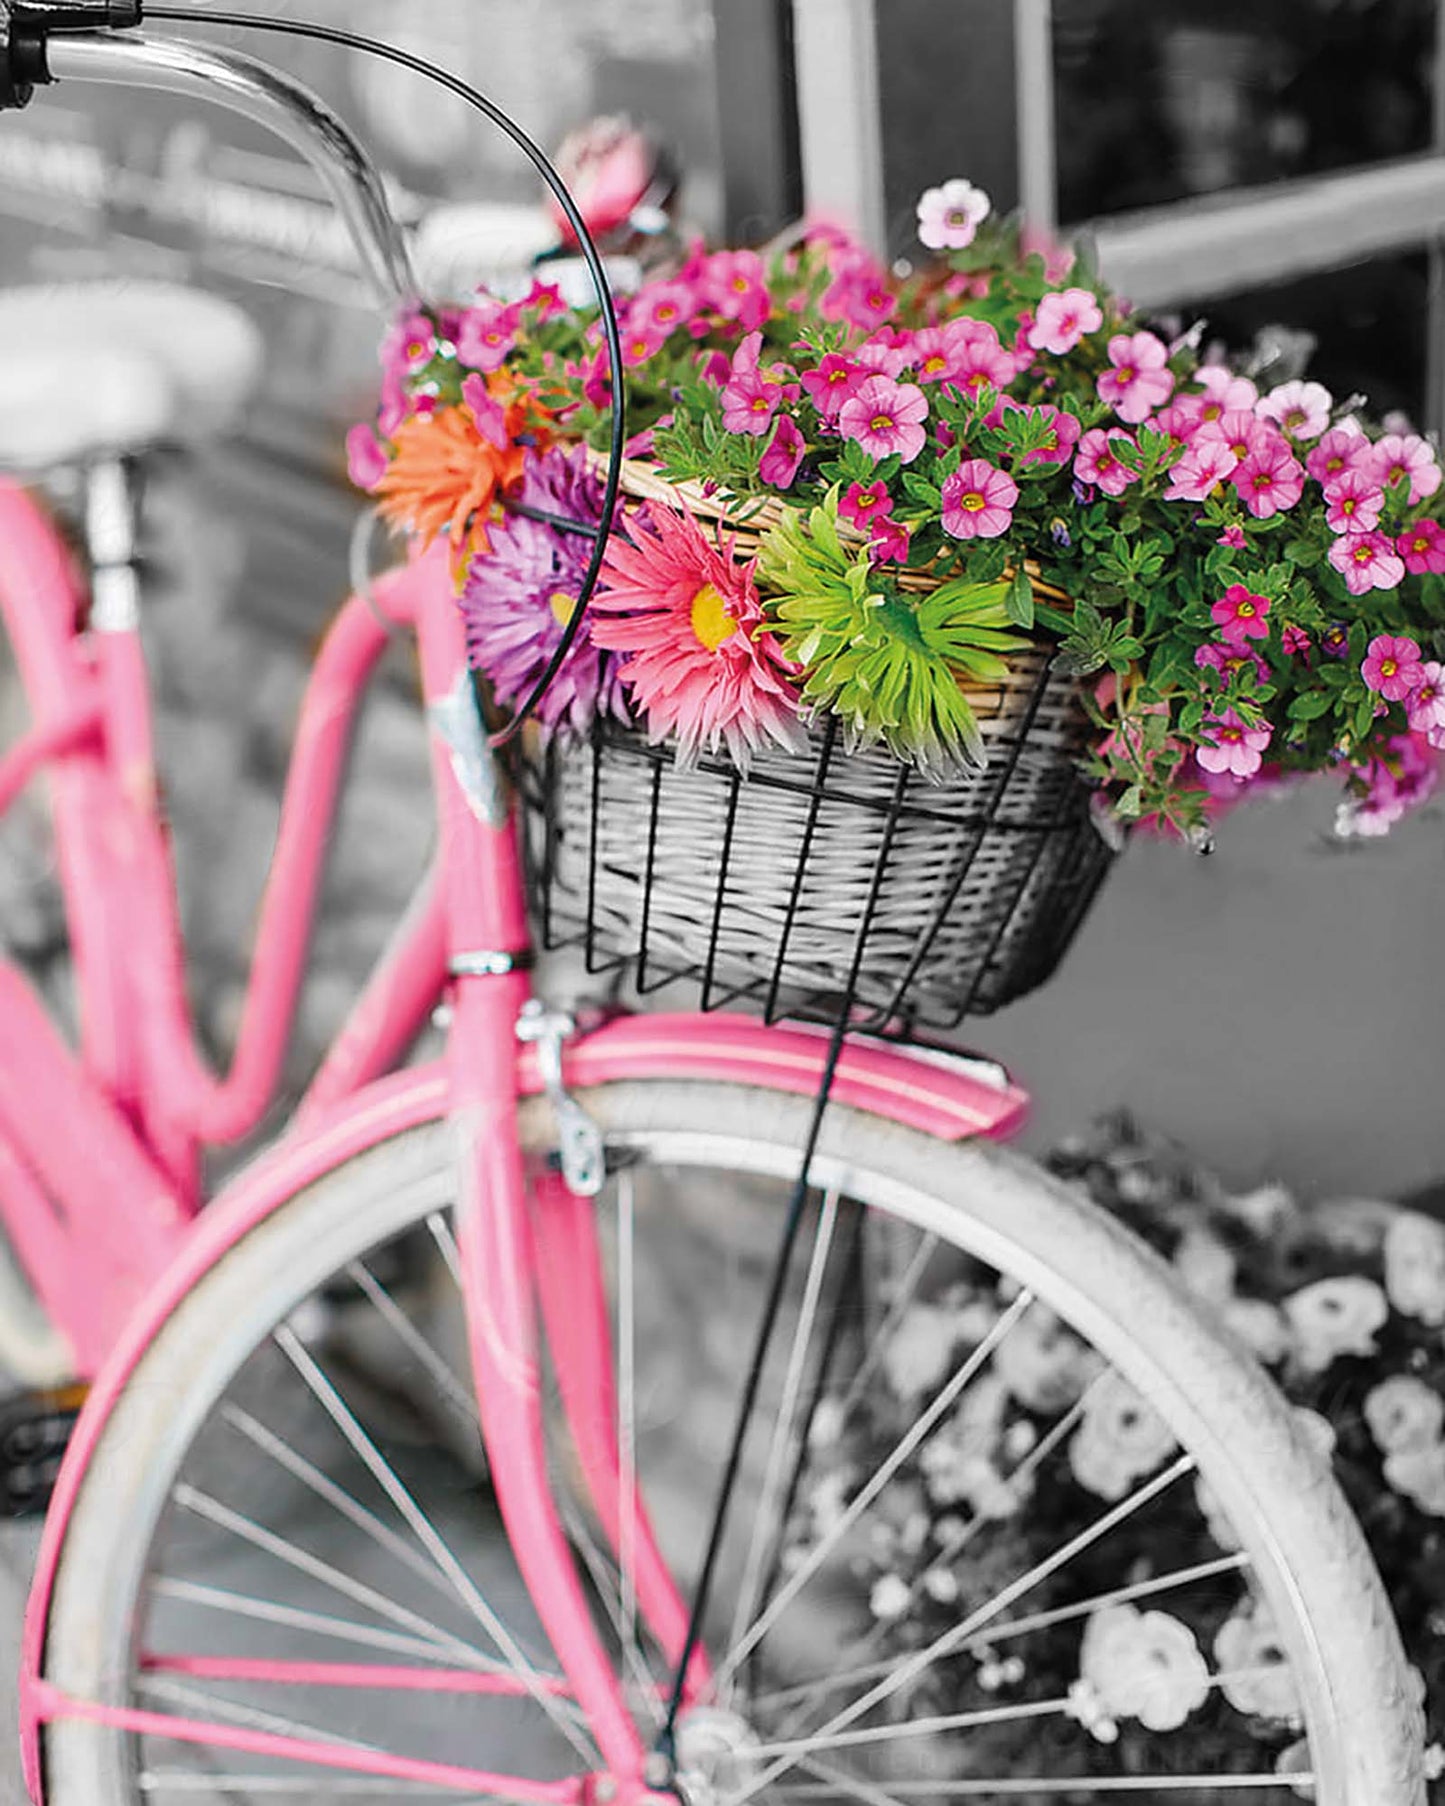 MG2464e - Pink bicycle